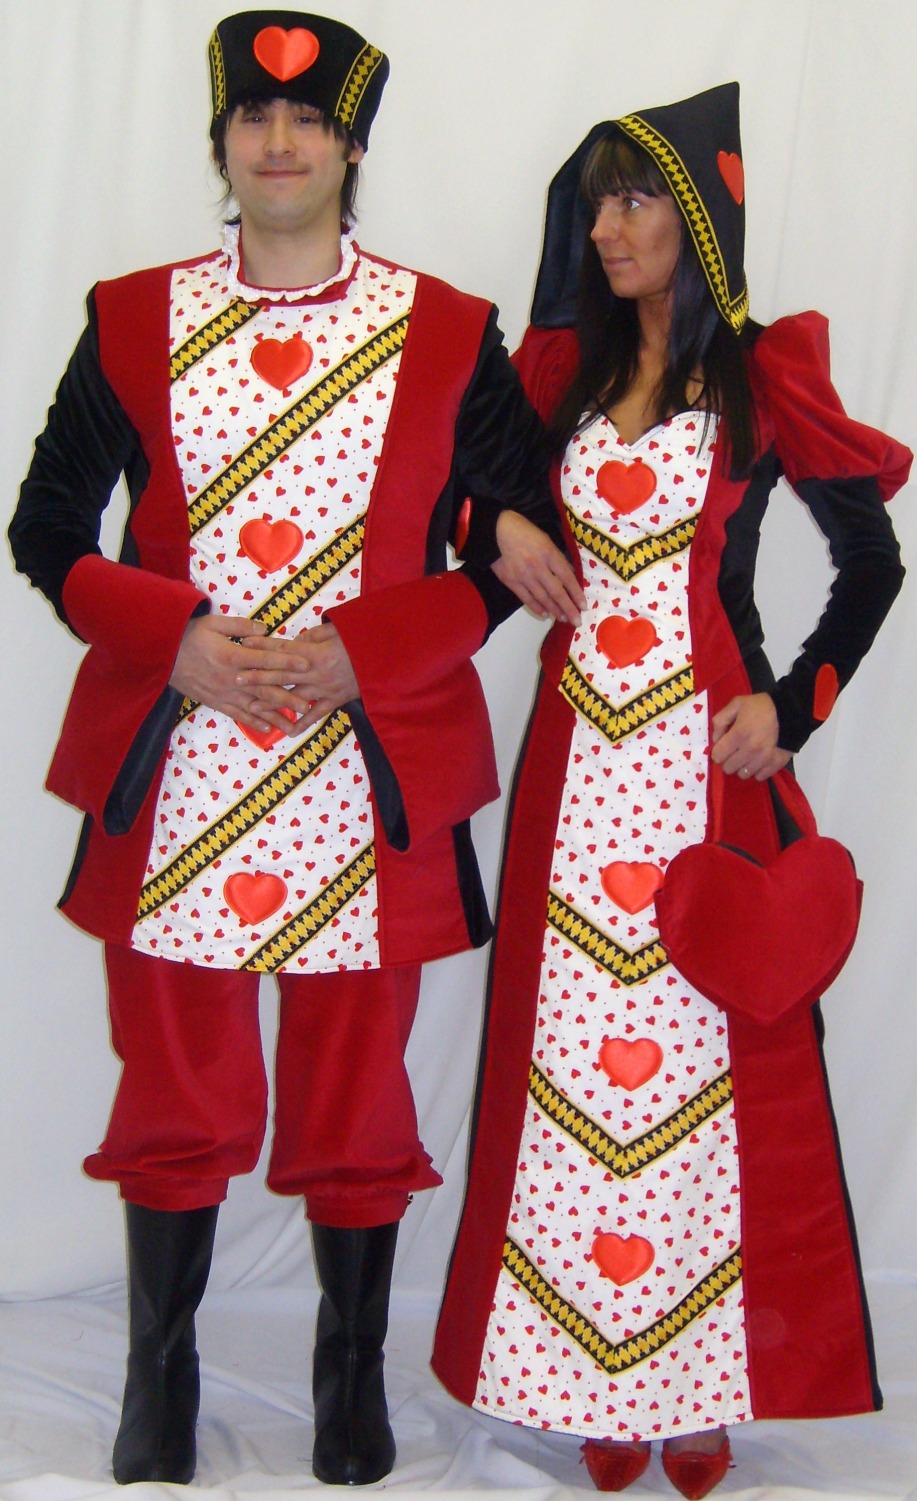 Ladies Queen of Hearts Costume Size 12 - 14 Image